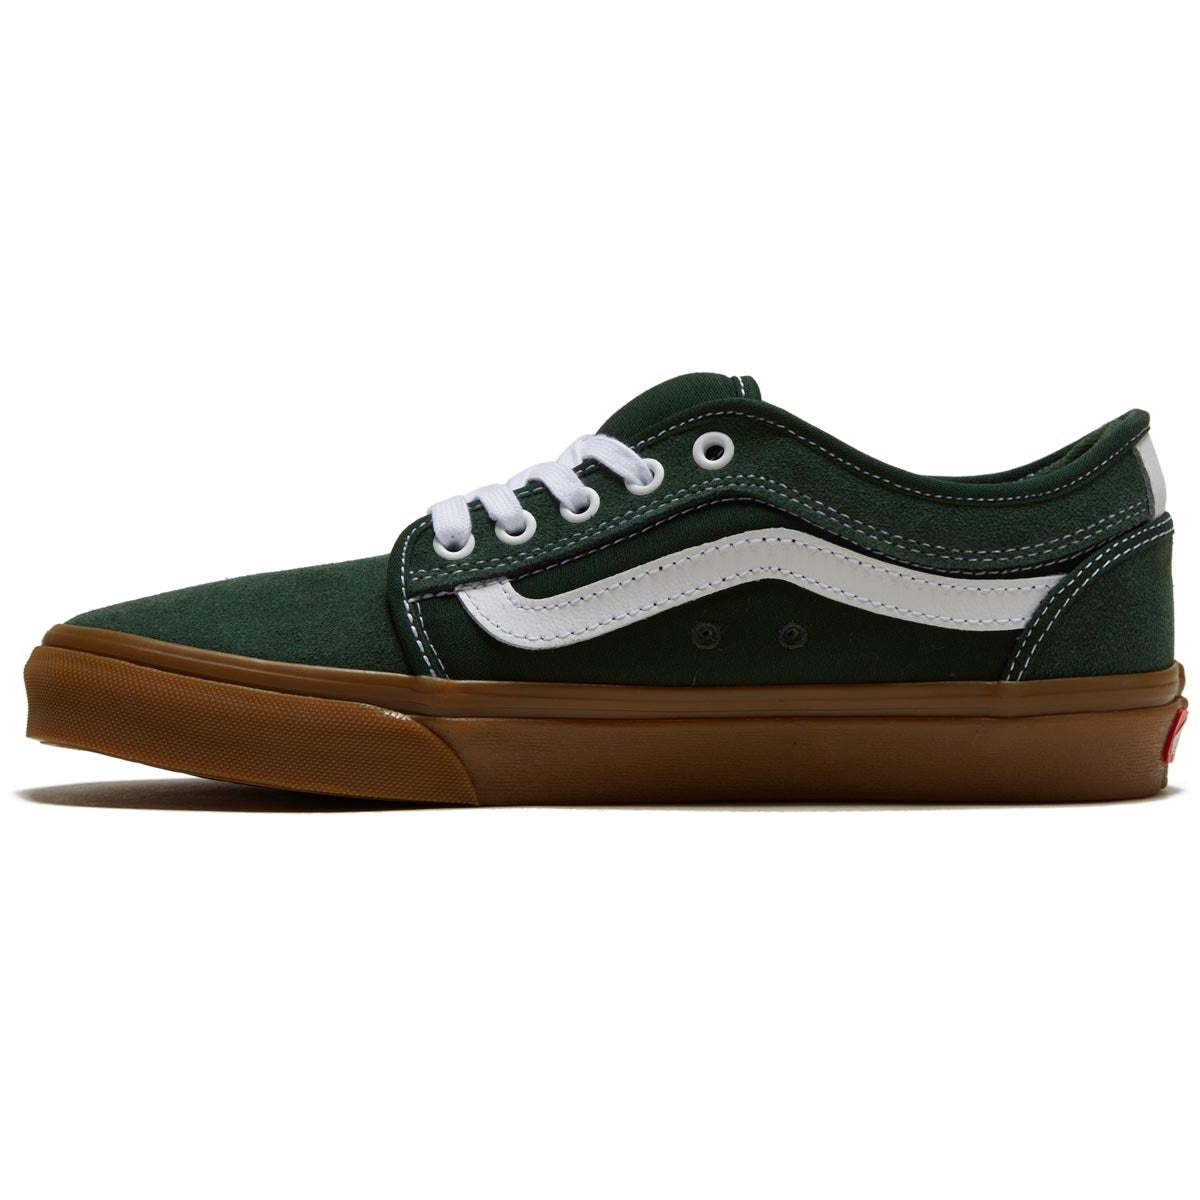 Vans Chukka Low Sidestripe Shoes - Dark Green/Gum image 2